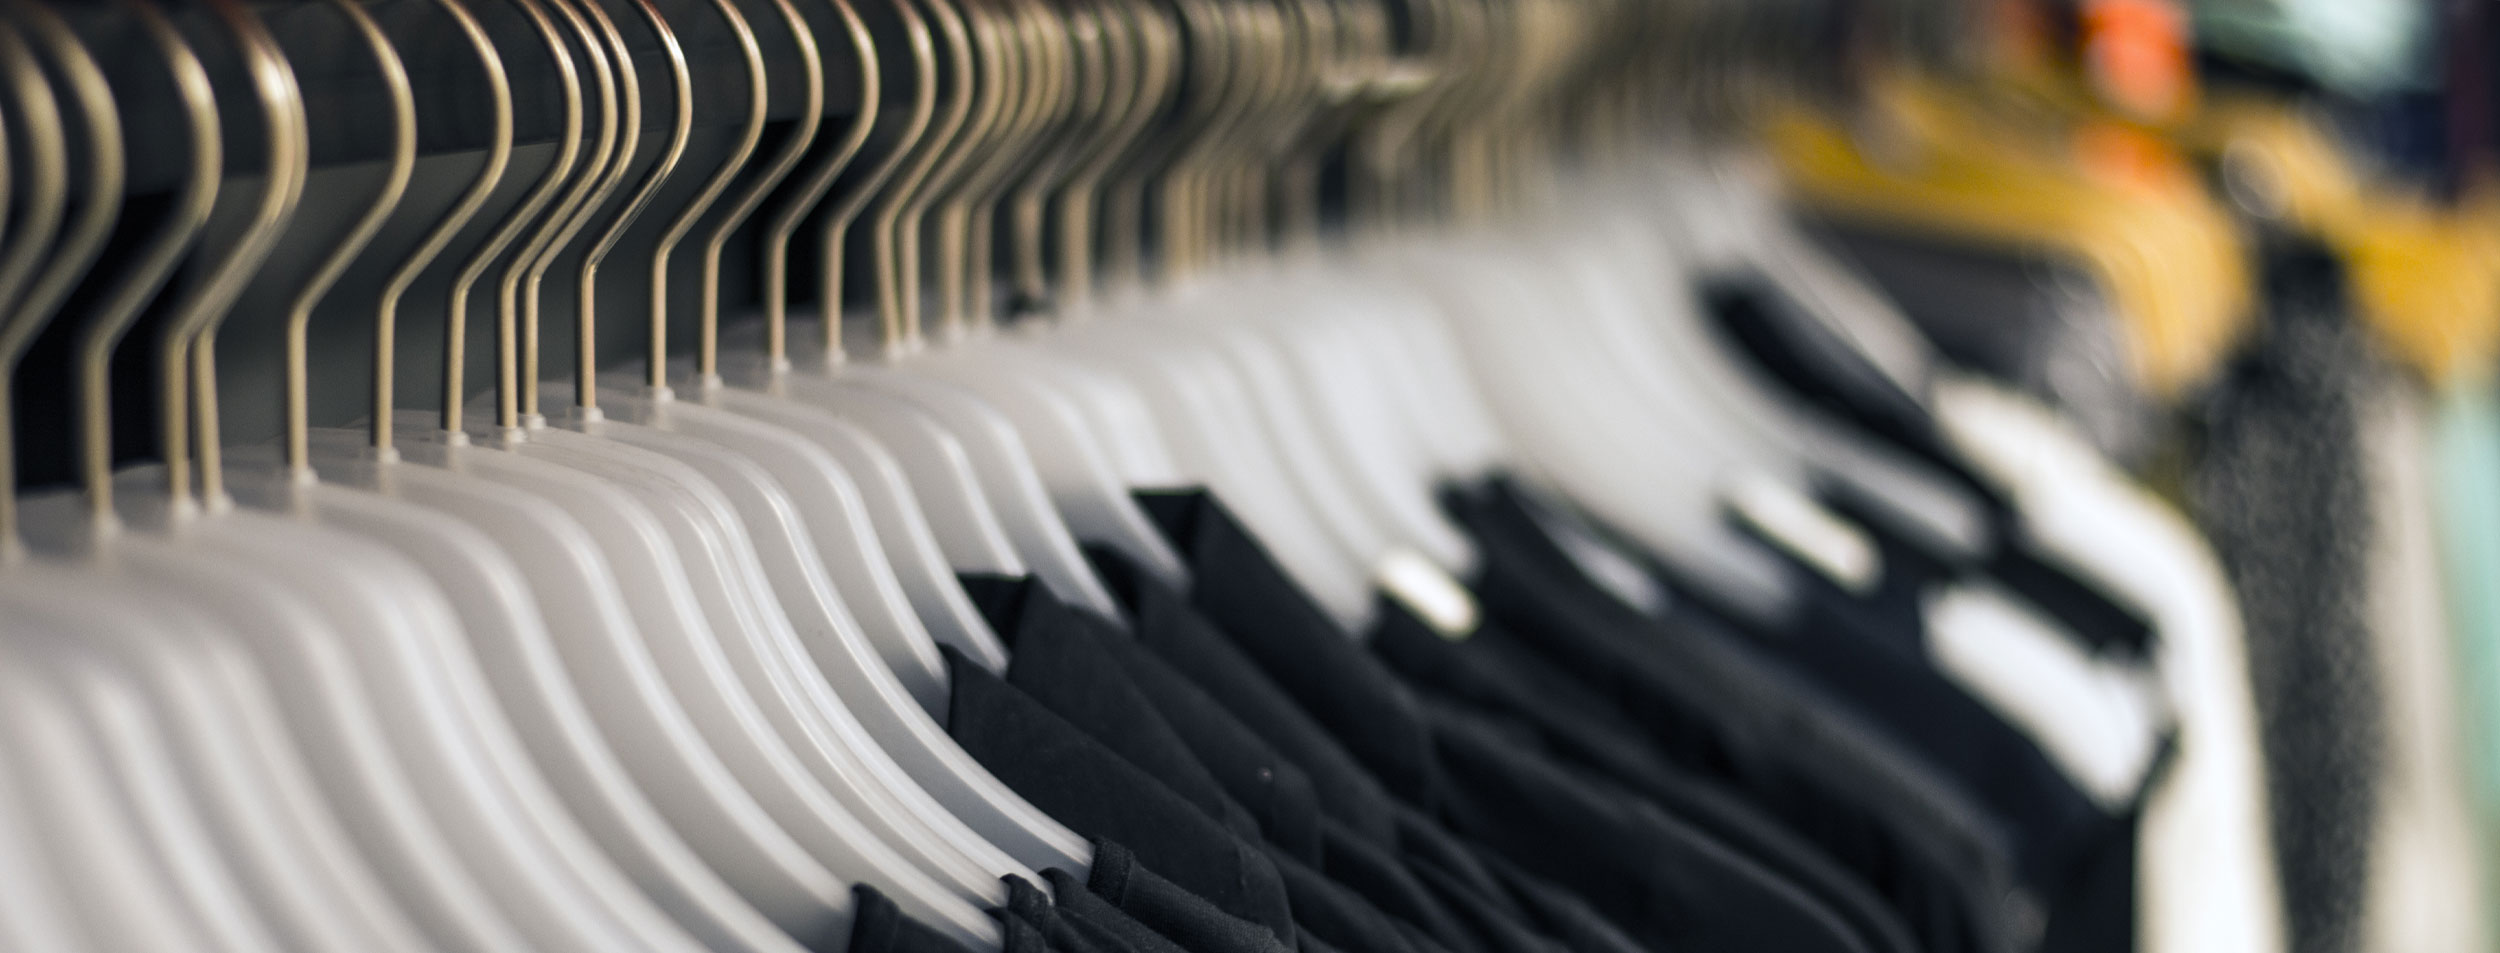 Garments on hangers on clothing rack